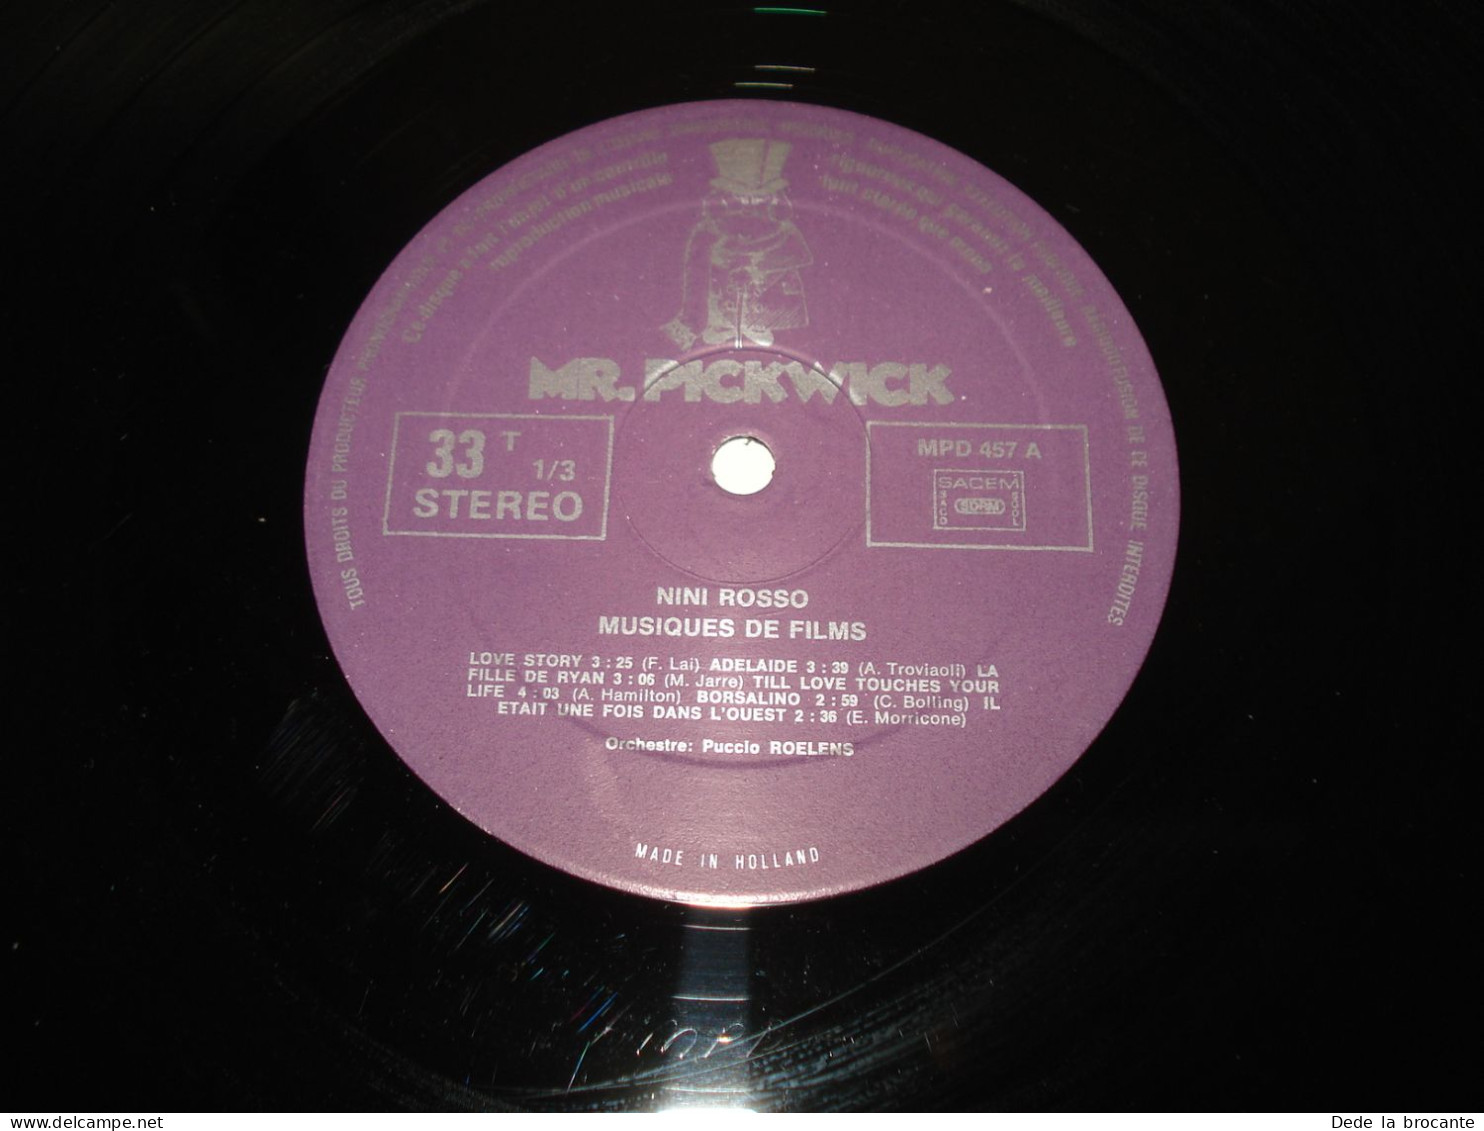 B10 / Nini Rosso – Musiques De Films - LP - MPD 457 - France  1974 - M/EX - Musica Di Film